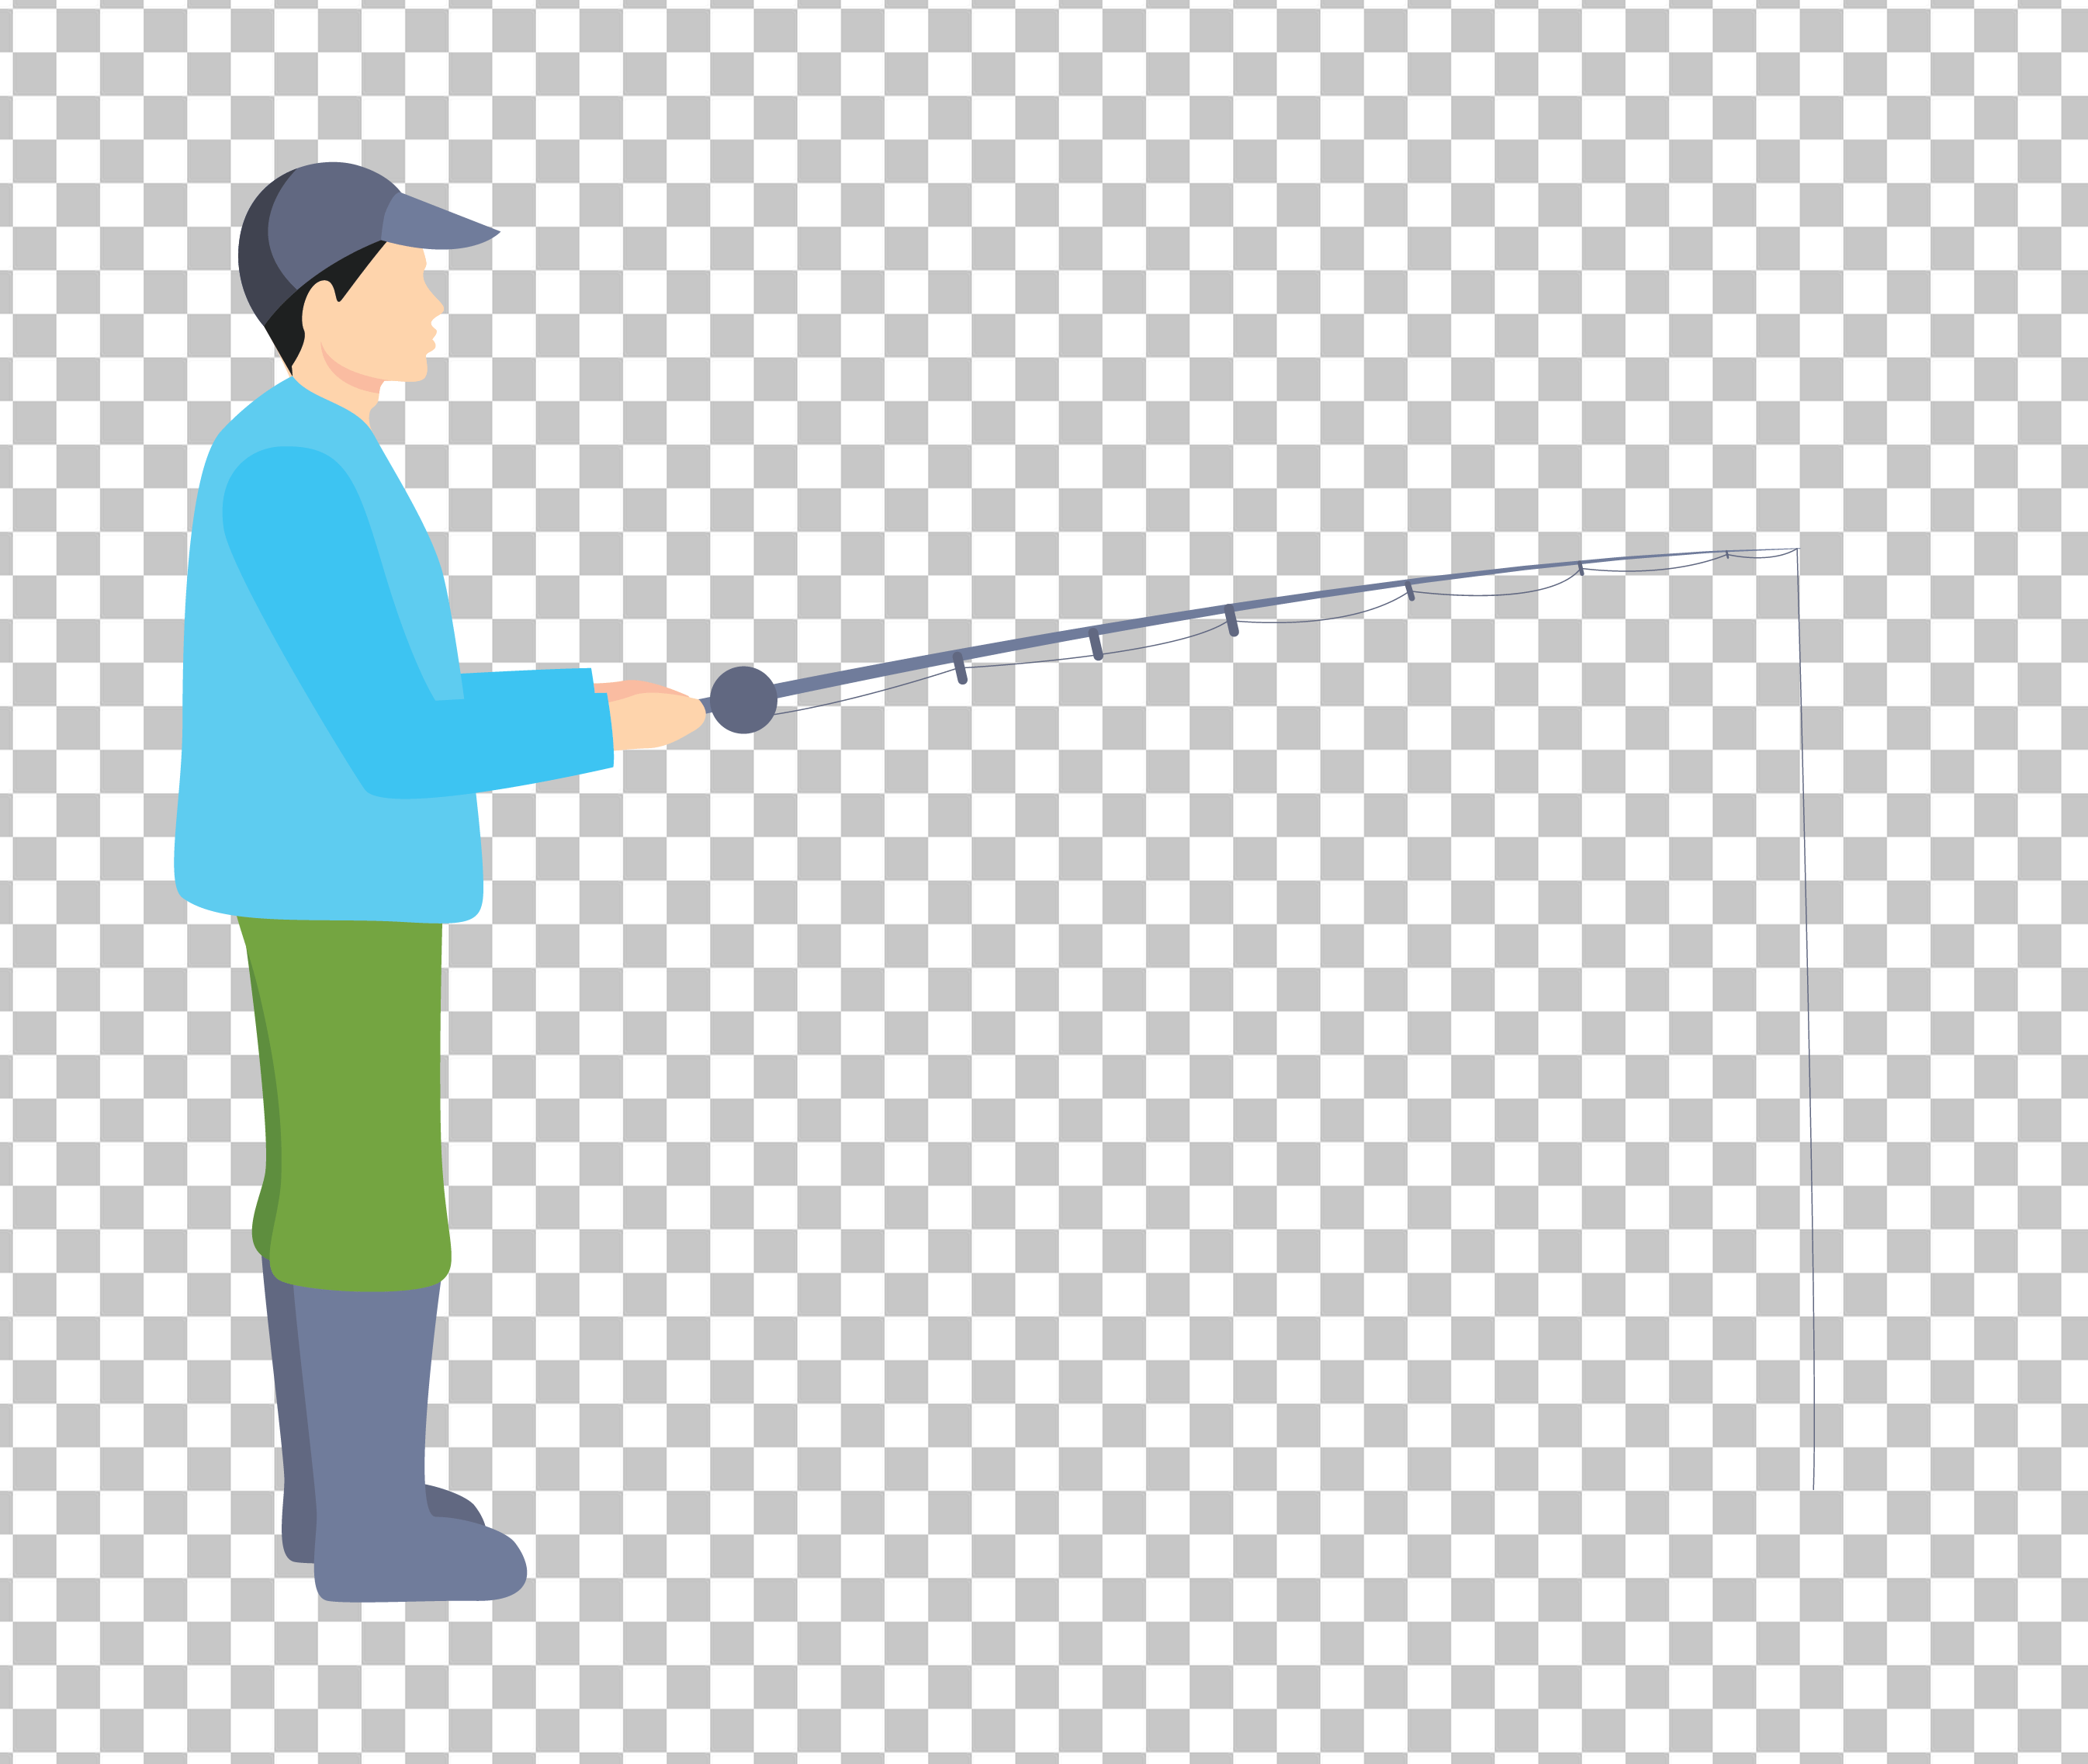 Cartoon Vector Man Fishing with a fishing rod.